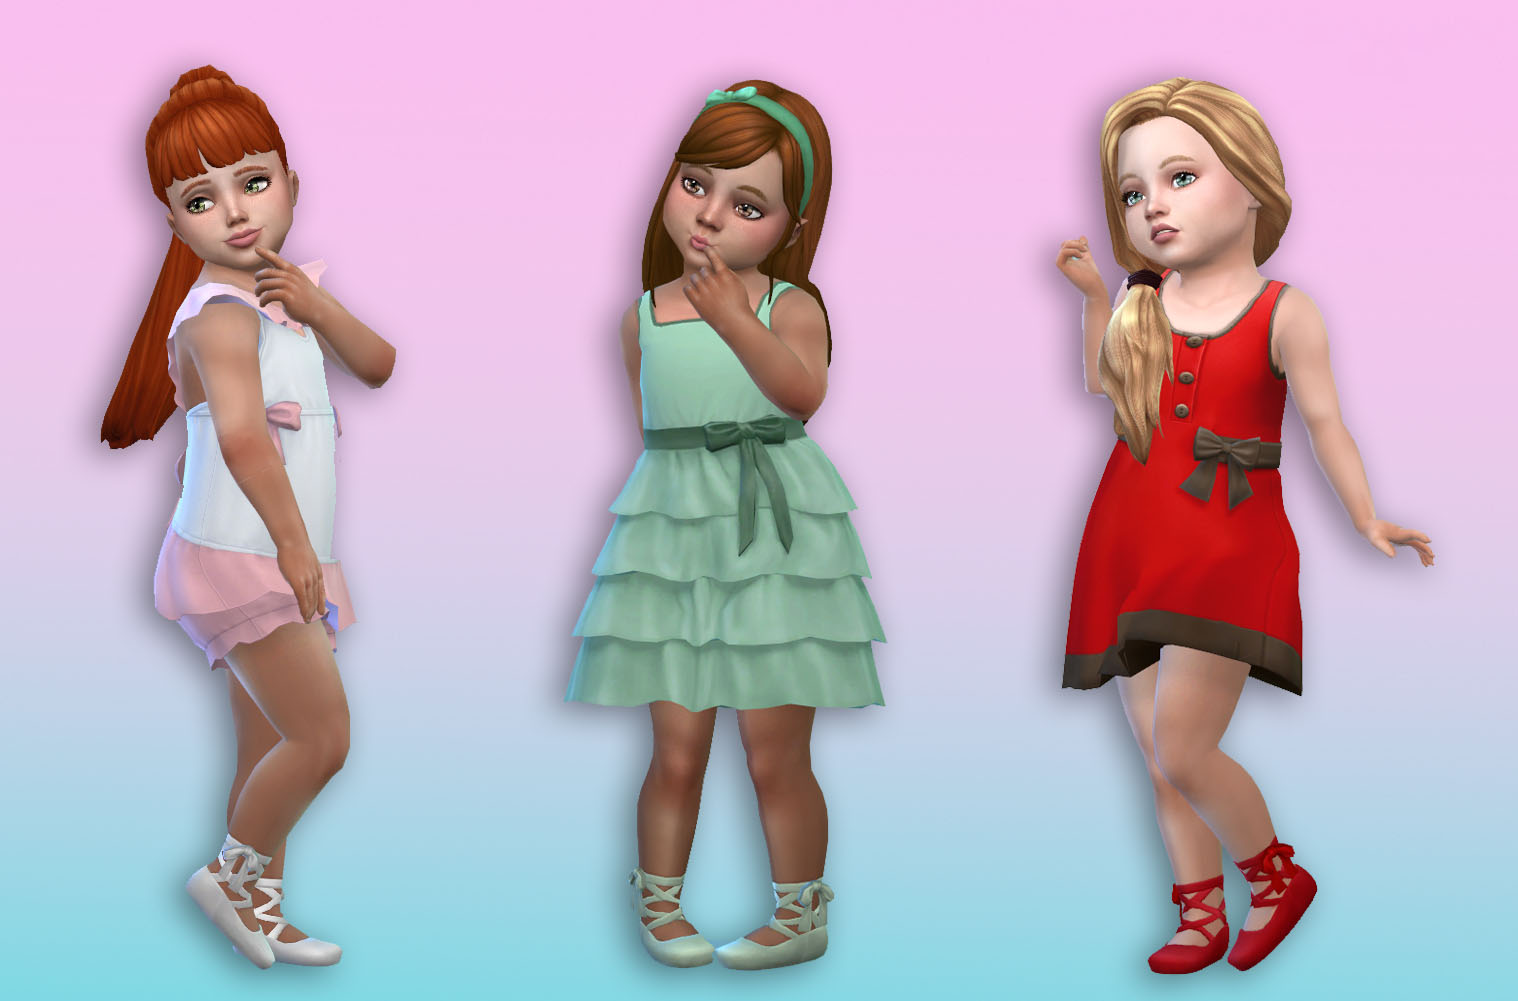 Ballet Shoes The Sims 4 Create a Sim - CurseForge